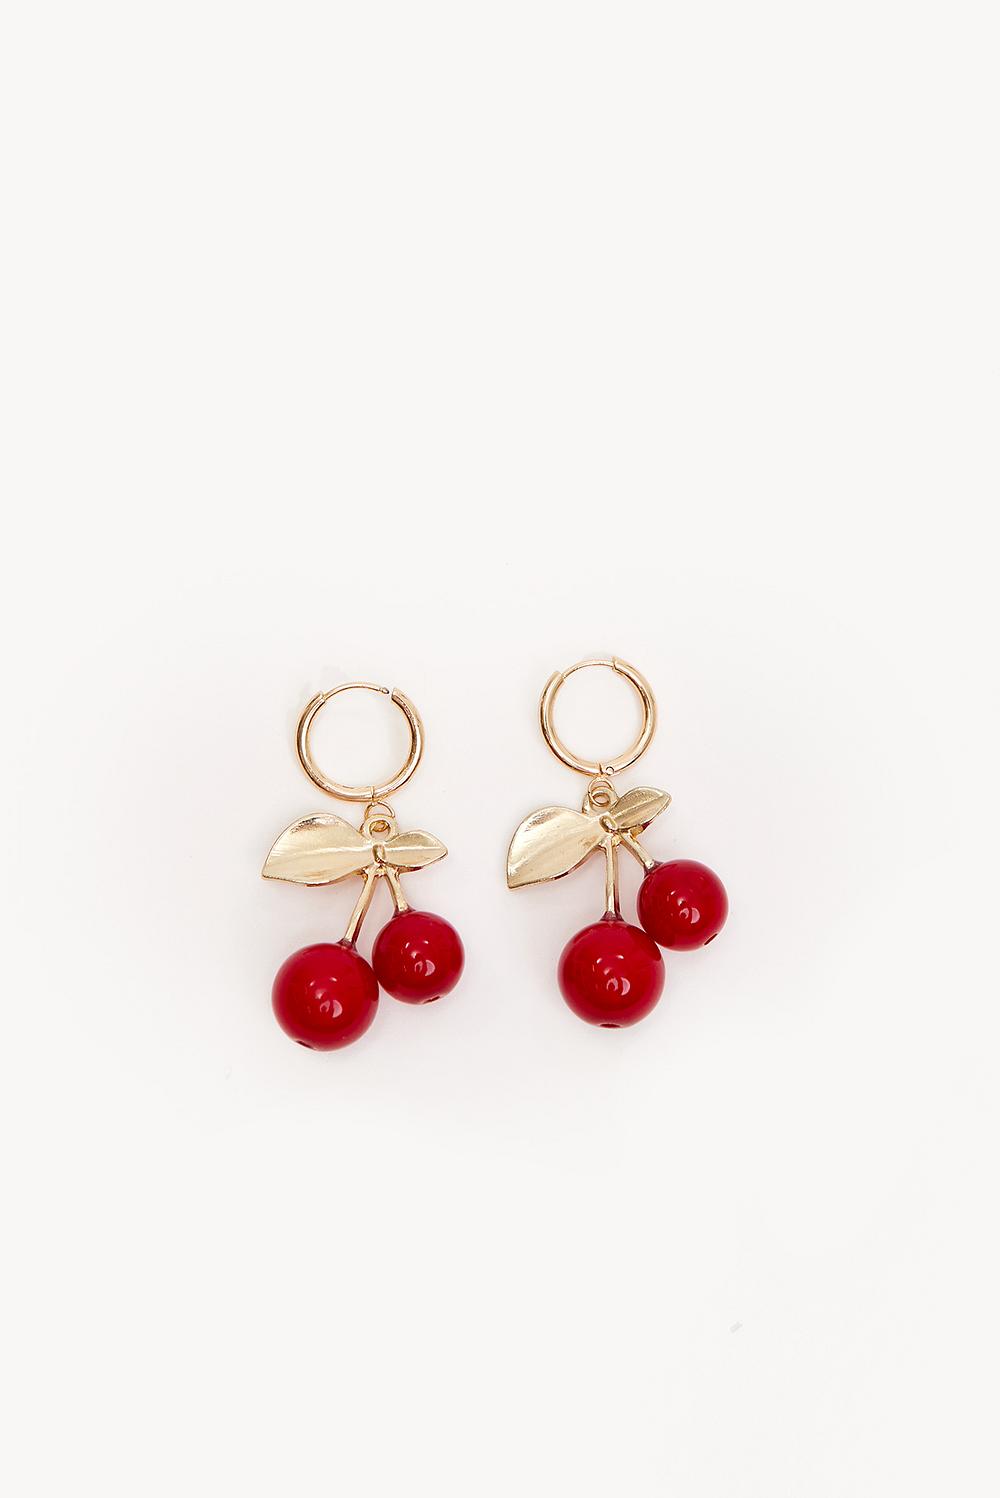 Dark red cherry earrings